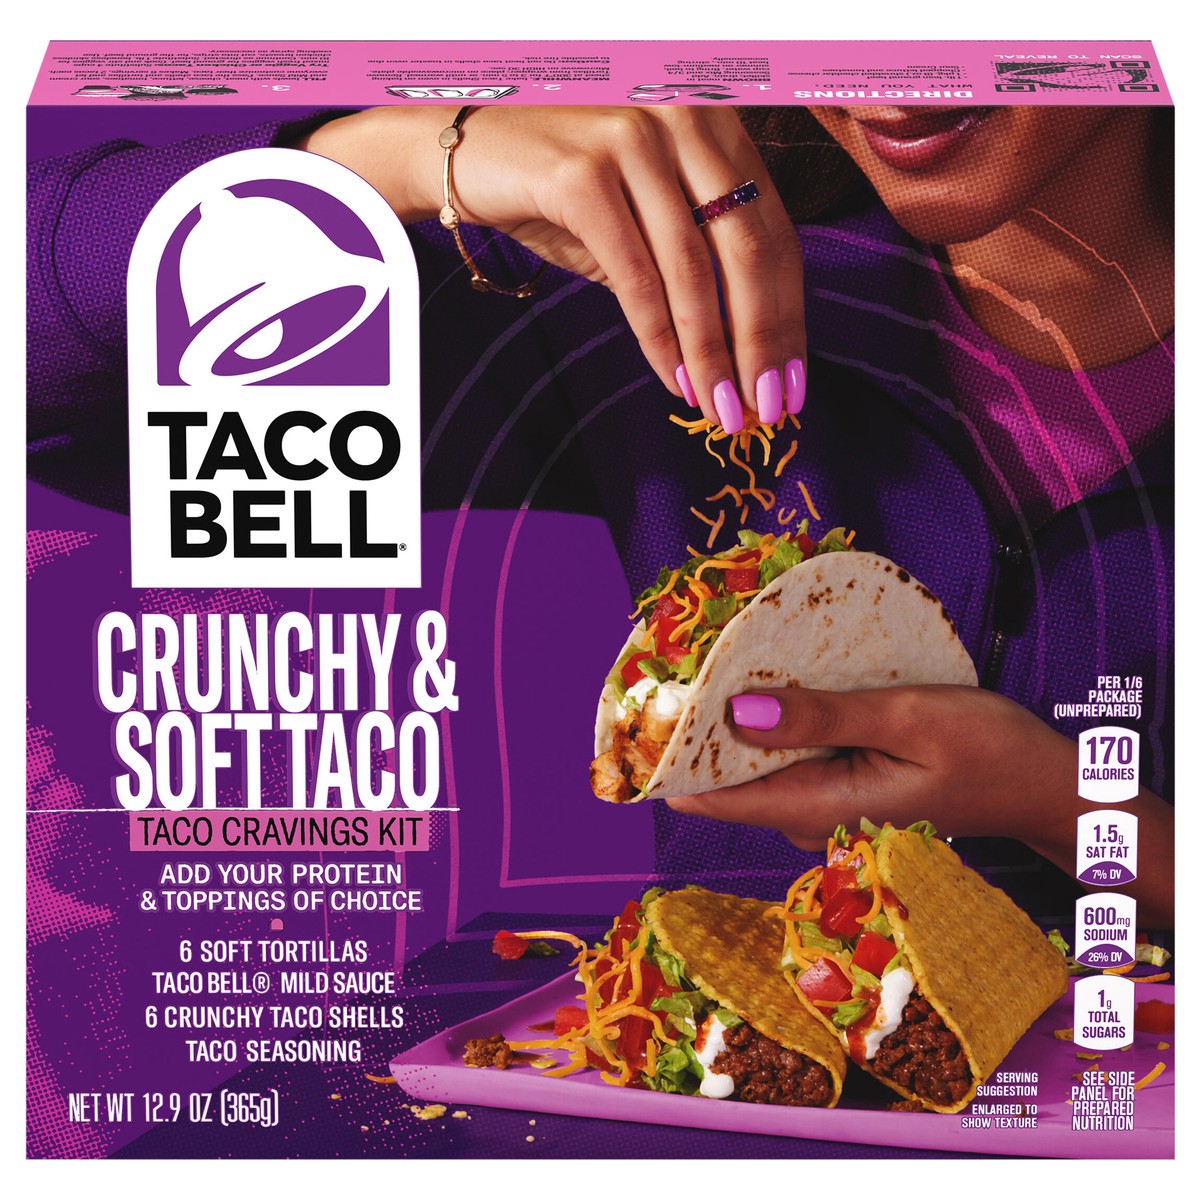 slide 1 of 101, Taco Bell Crunchy & Soft Taco Cravings Kit with 6 Soft Tortillas, 6 Crunchy Taco Shells, Taco Bell Mild Sauce & Seasoning, 12.77 oz Box, 1 ct